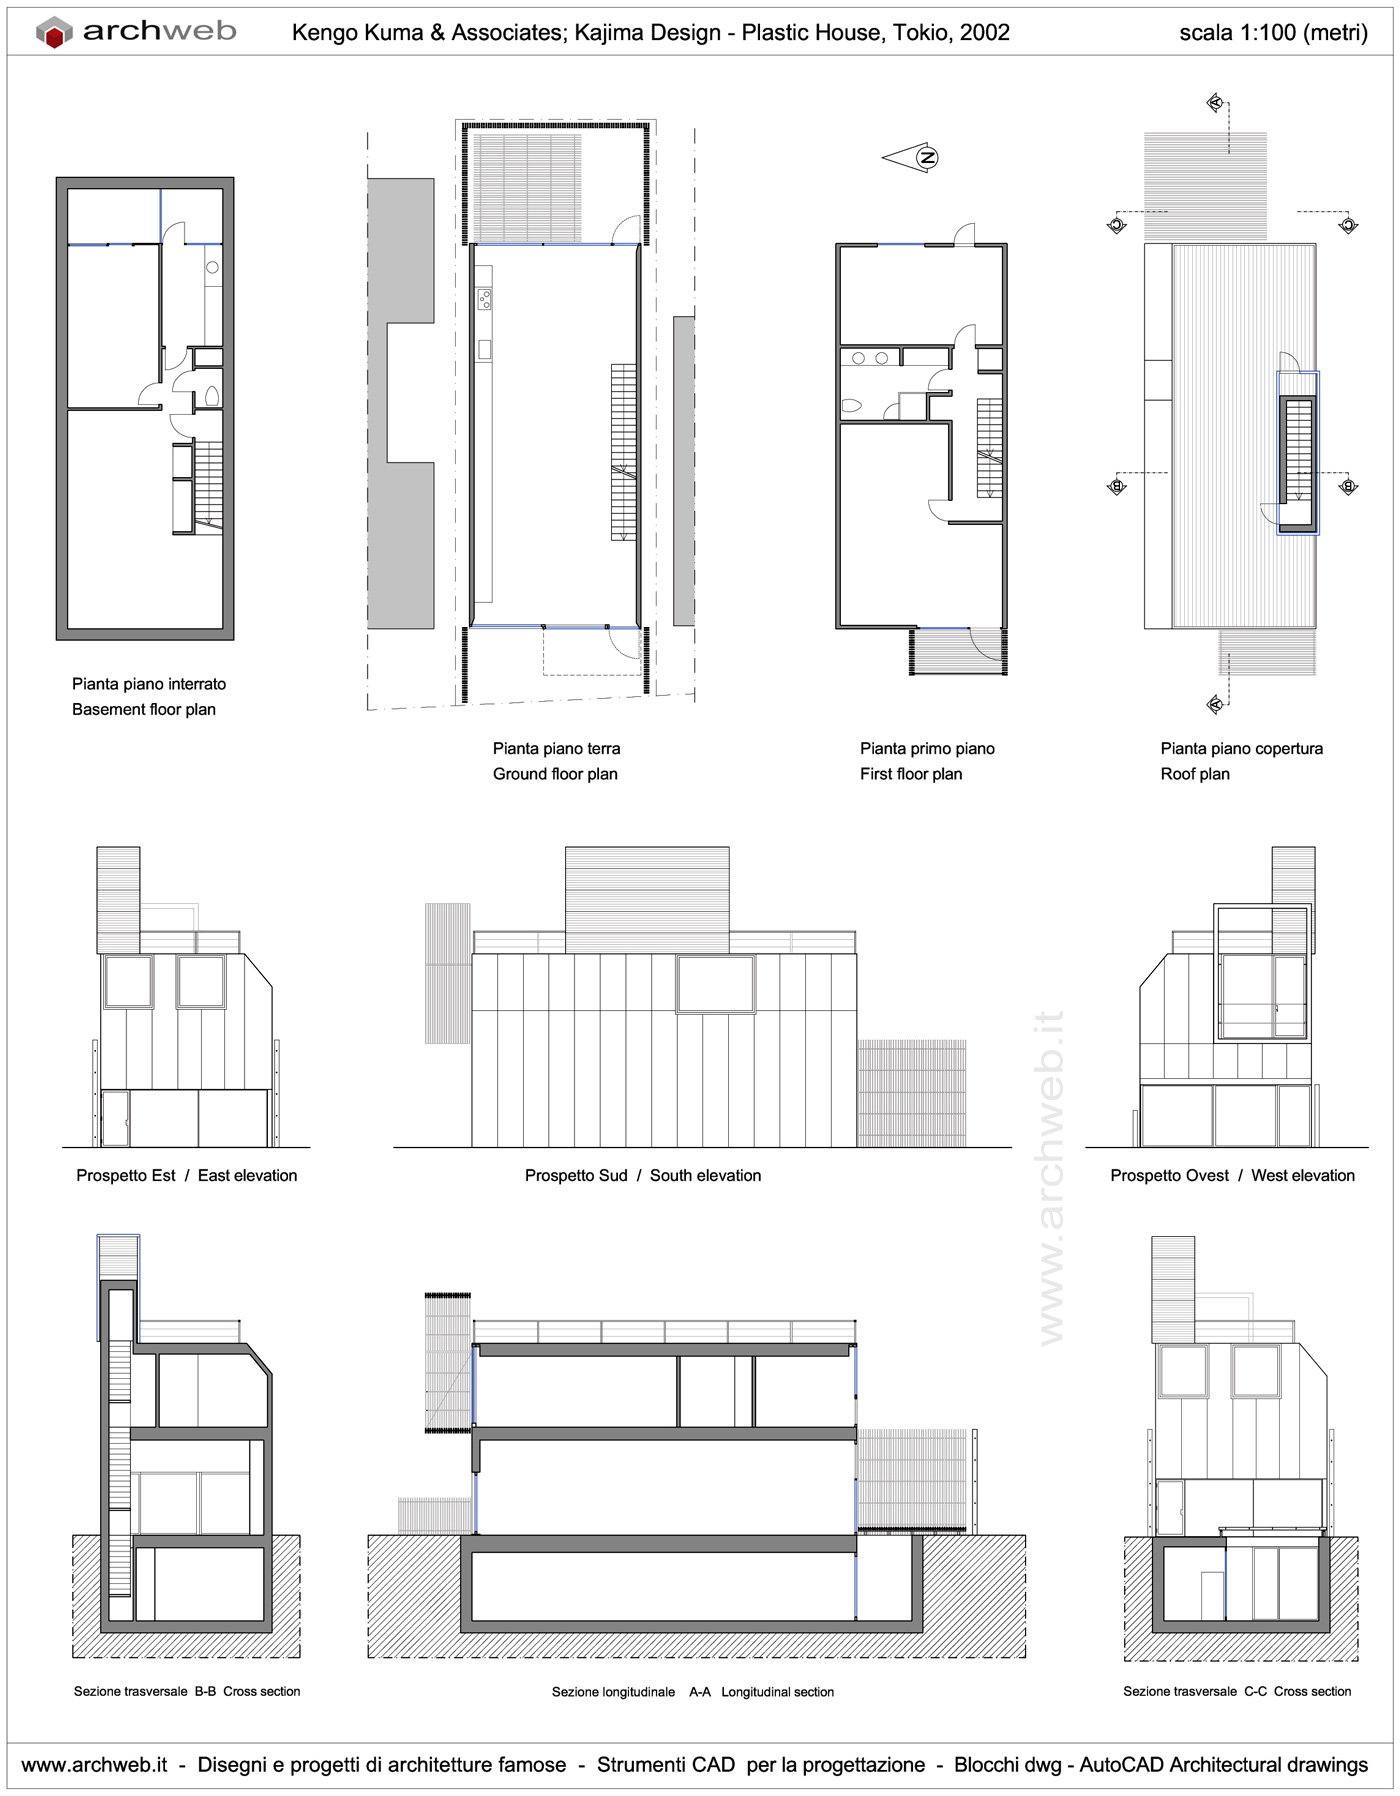 Plastic House K. Kuma drawings plan